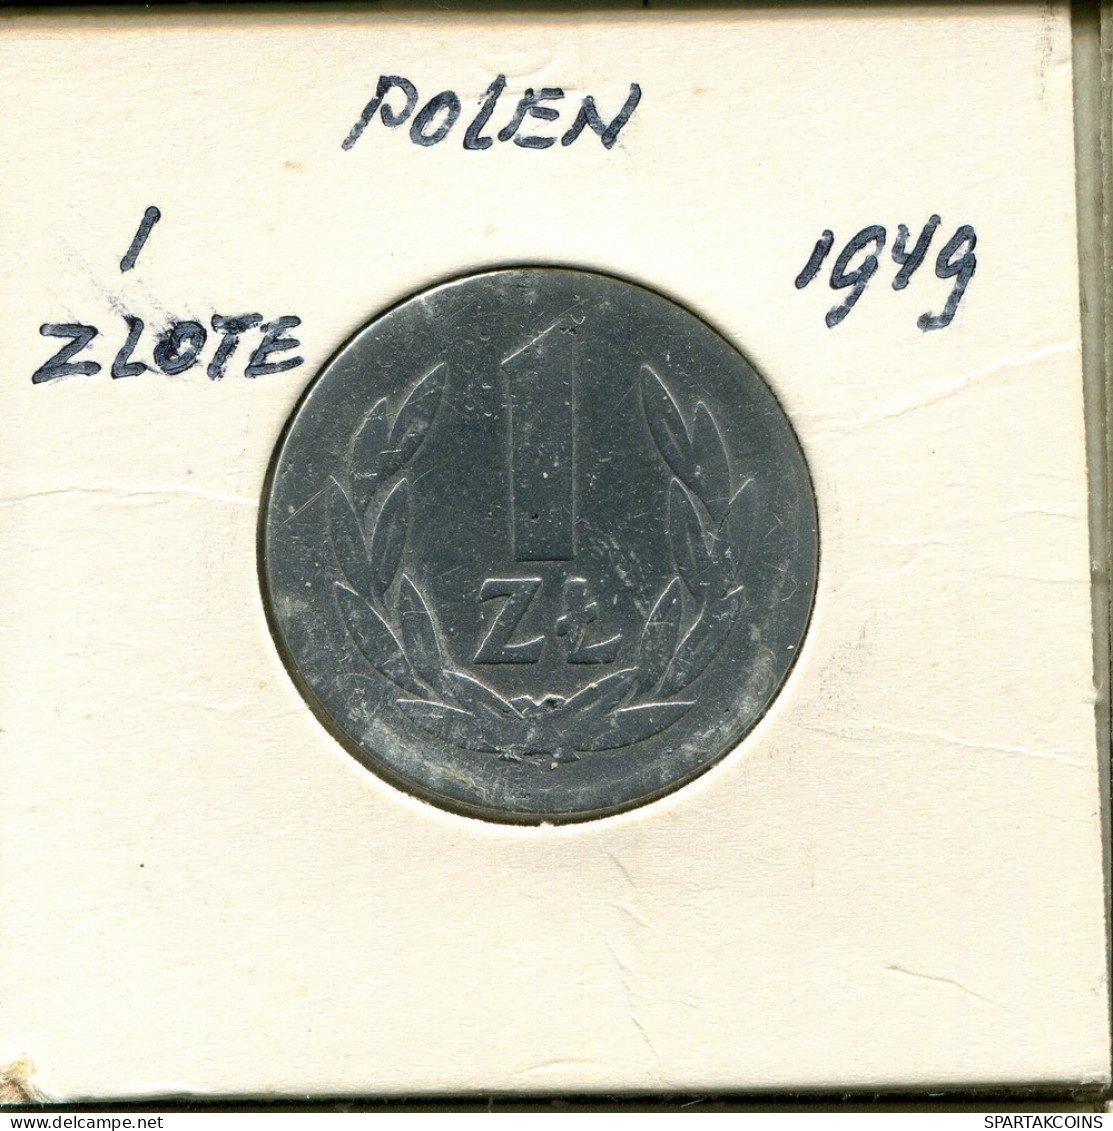 1 ZLOTE 1949 POLAND Coin #AR778.U.A - Poland